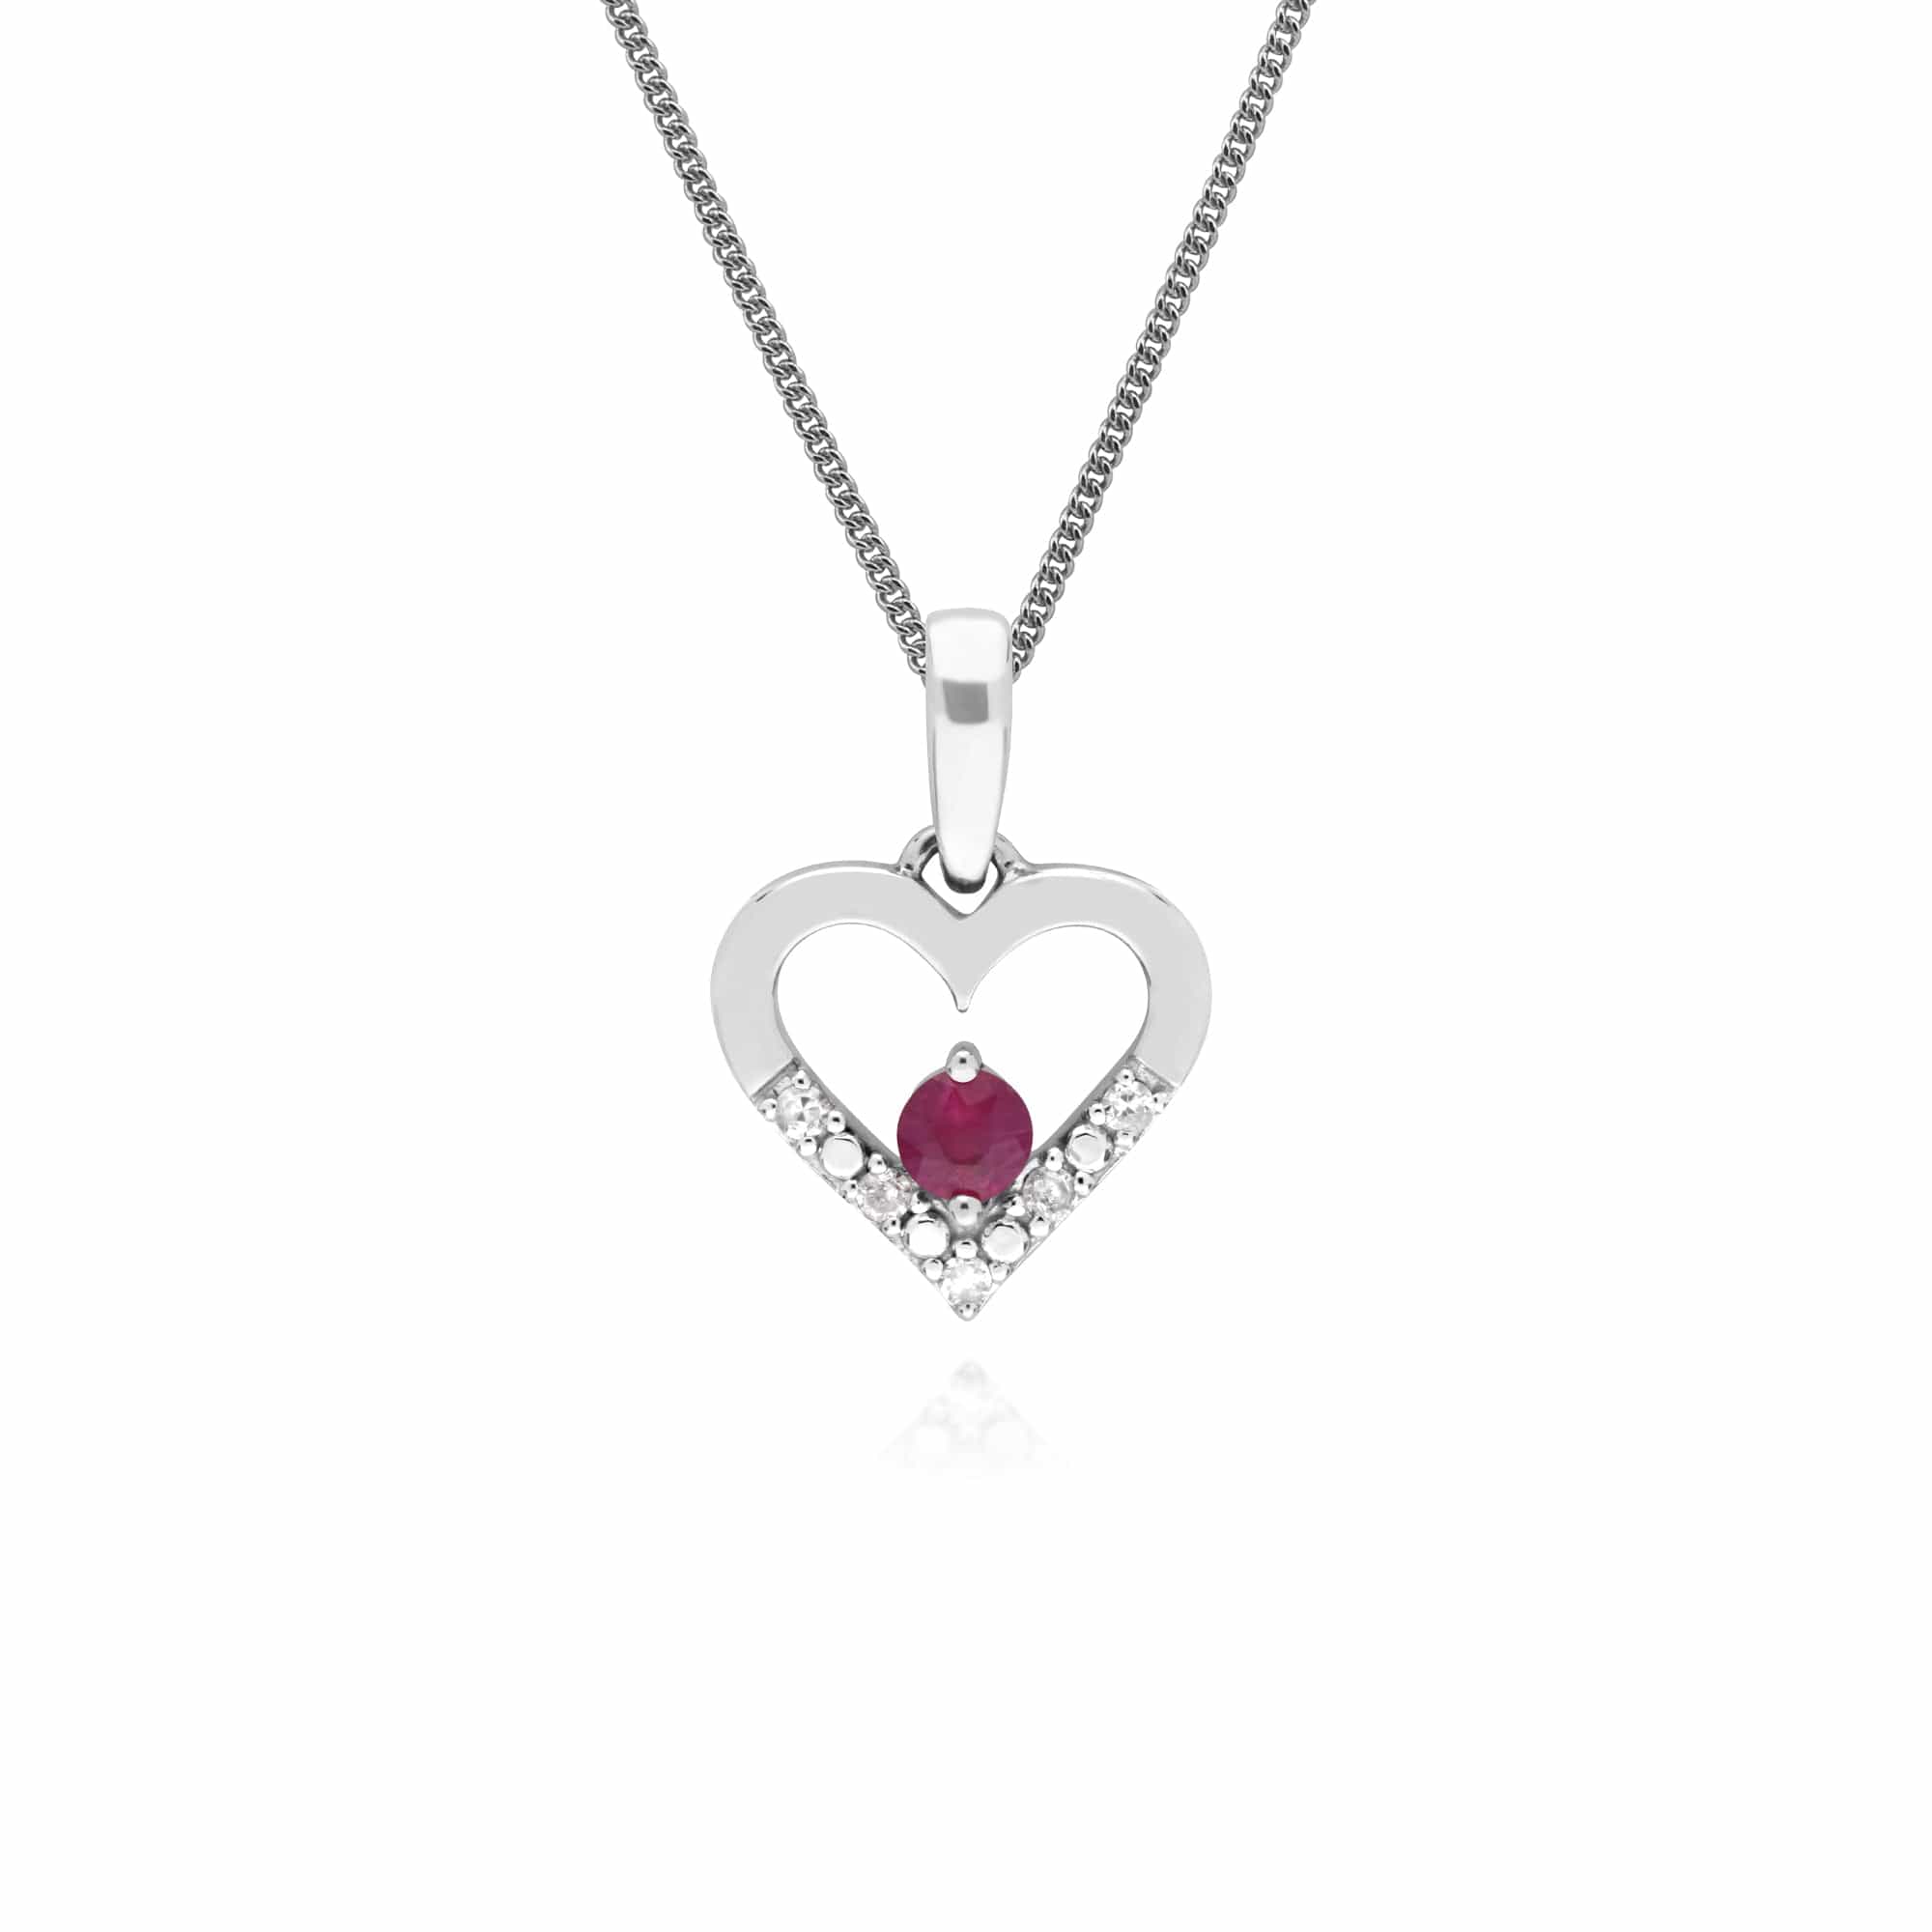 162E0258019-162P0219019 Classic Round Ruby & Diamond Heart Drop Earrings & Pendant Set in 9ct White Gold 3